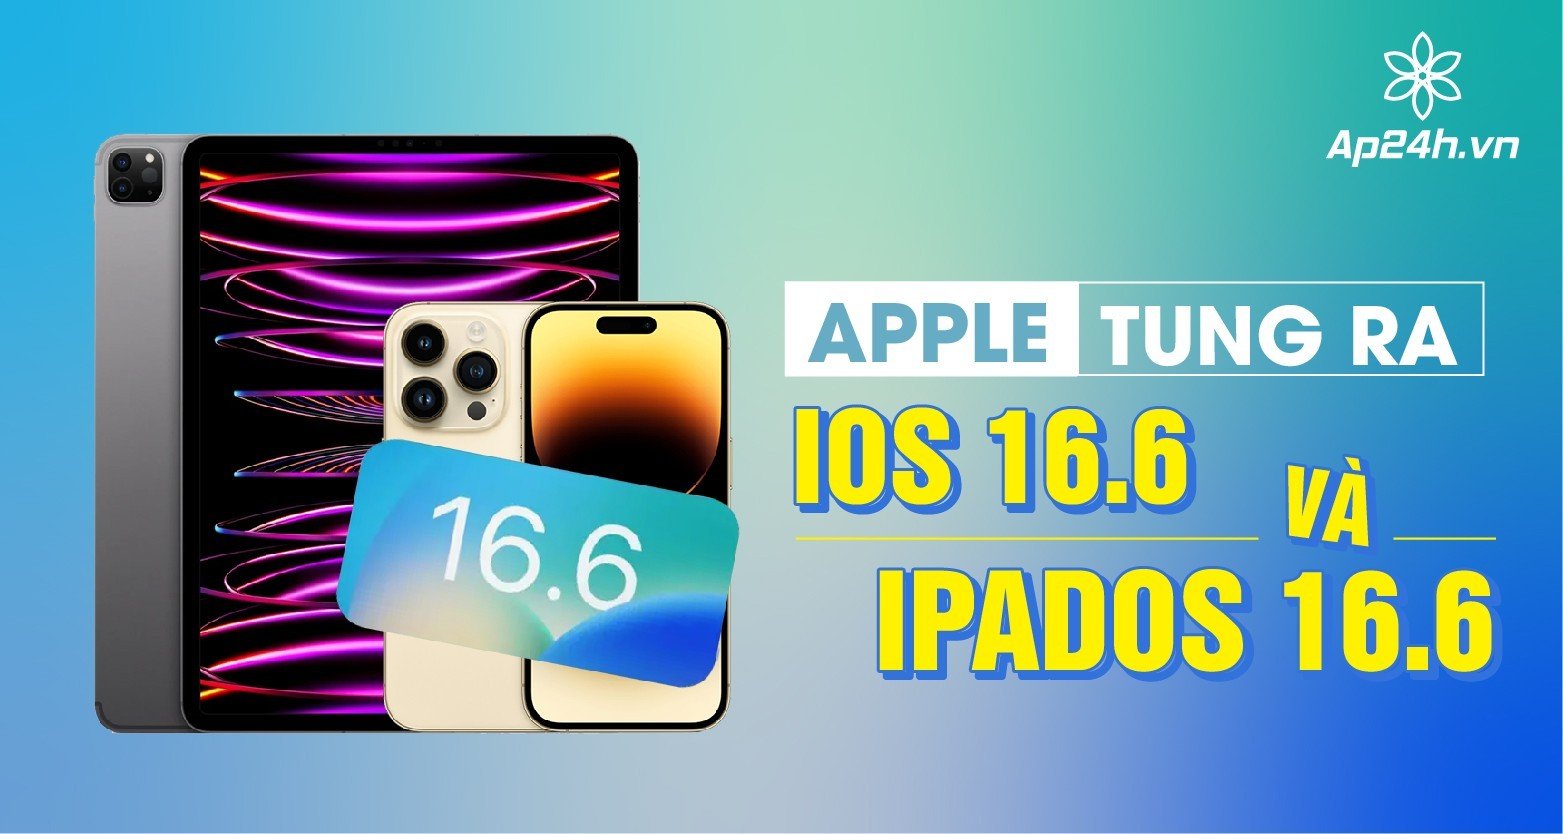 Apple tung ra iOS 16.6 và iPadOS 16.6 